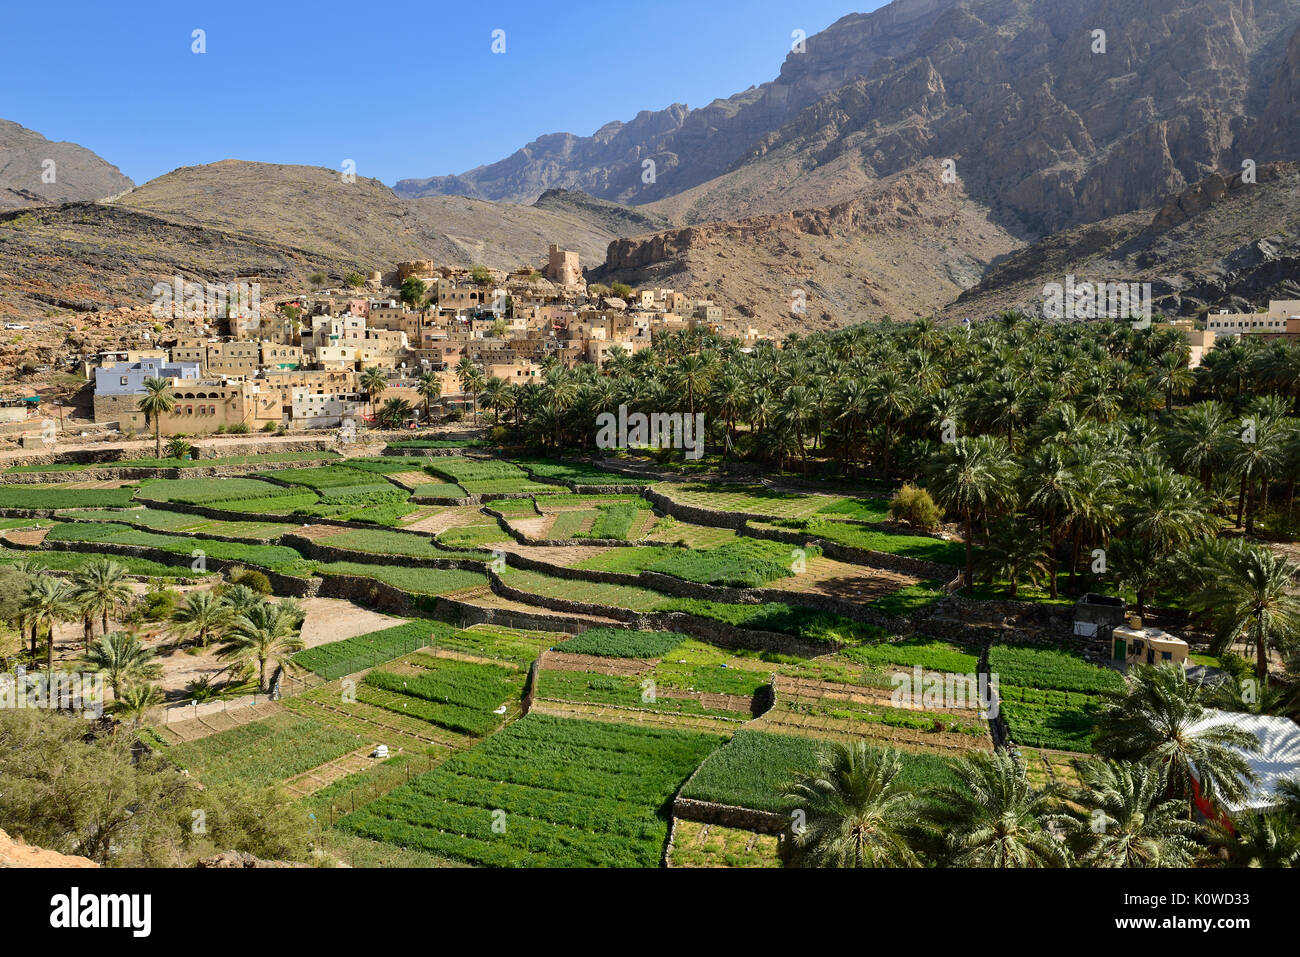 Village of Balad Sayt, Hajar al Gharbi mountains, Dakhiliyah, Oman Stock Photo